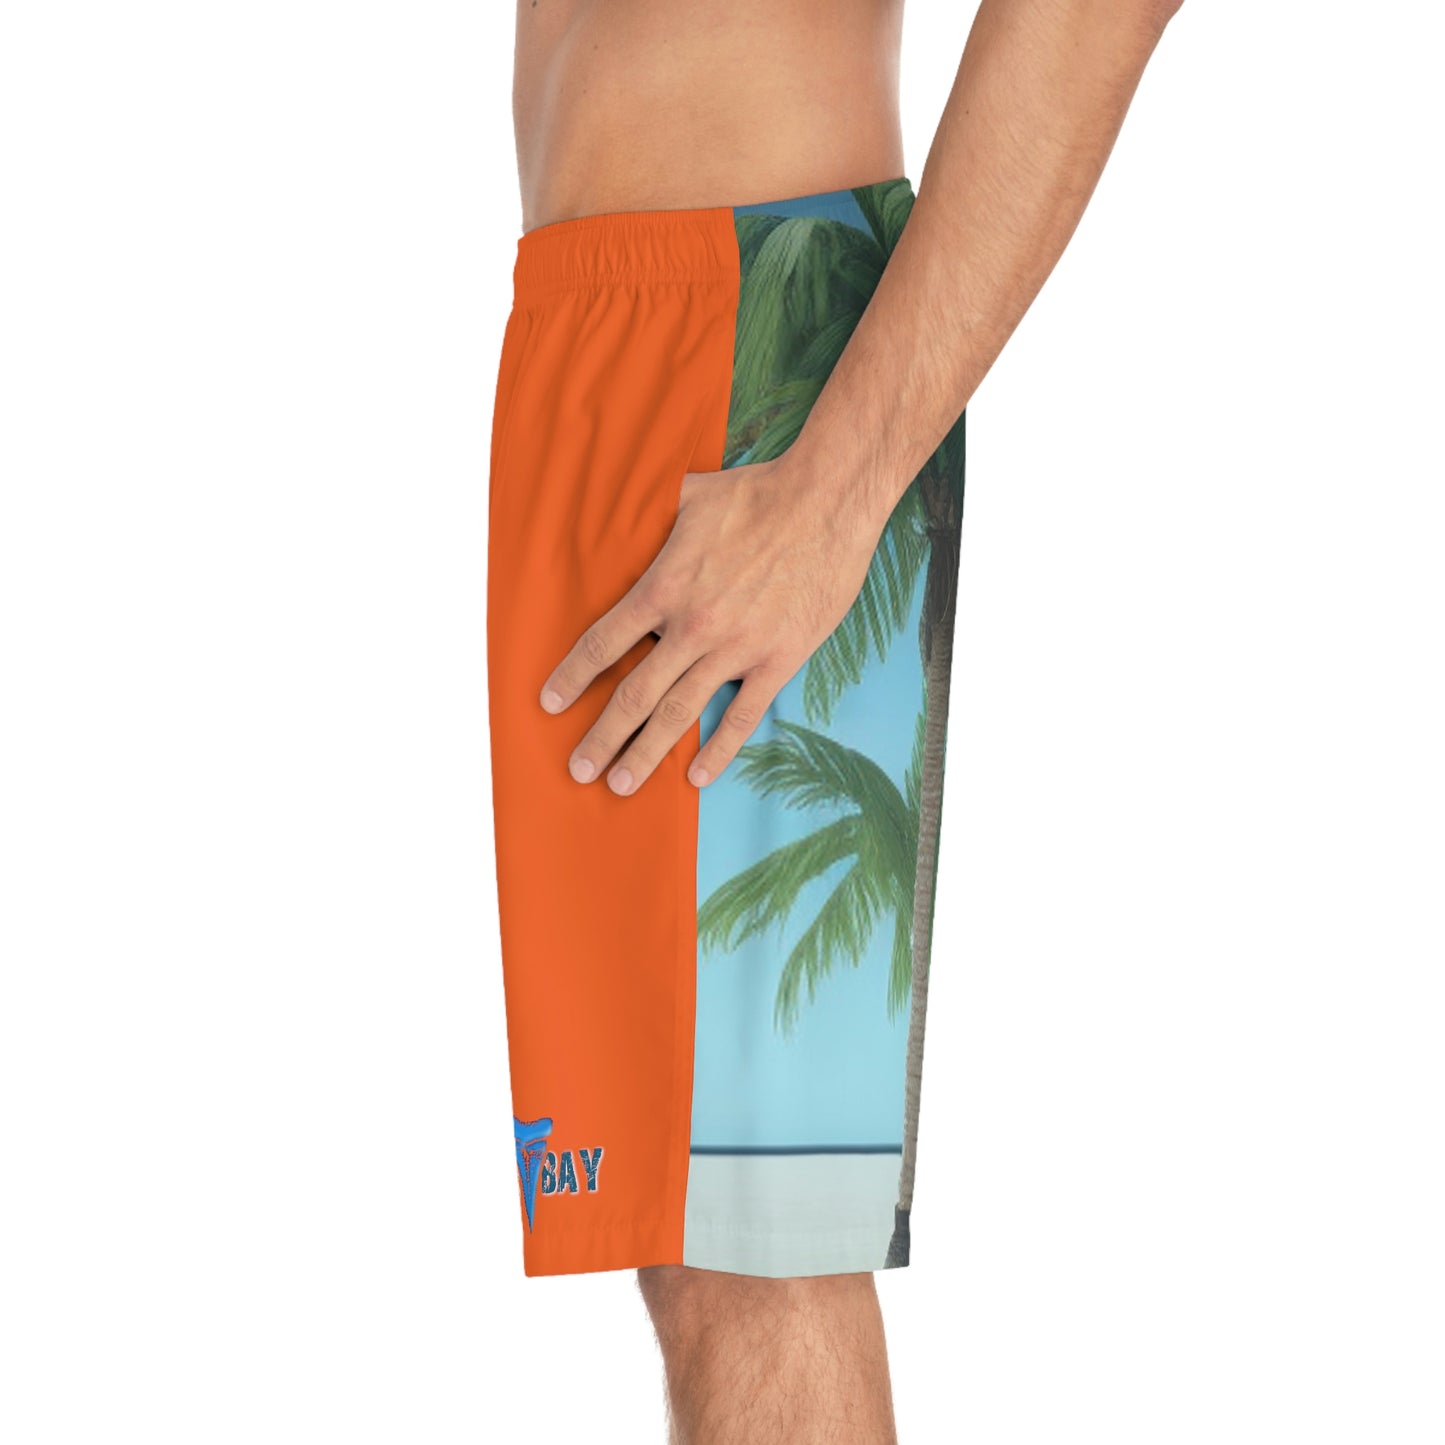 Men's Board Shorts Orange with Palmtree SharkBite Bay